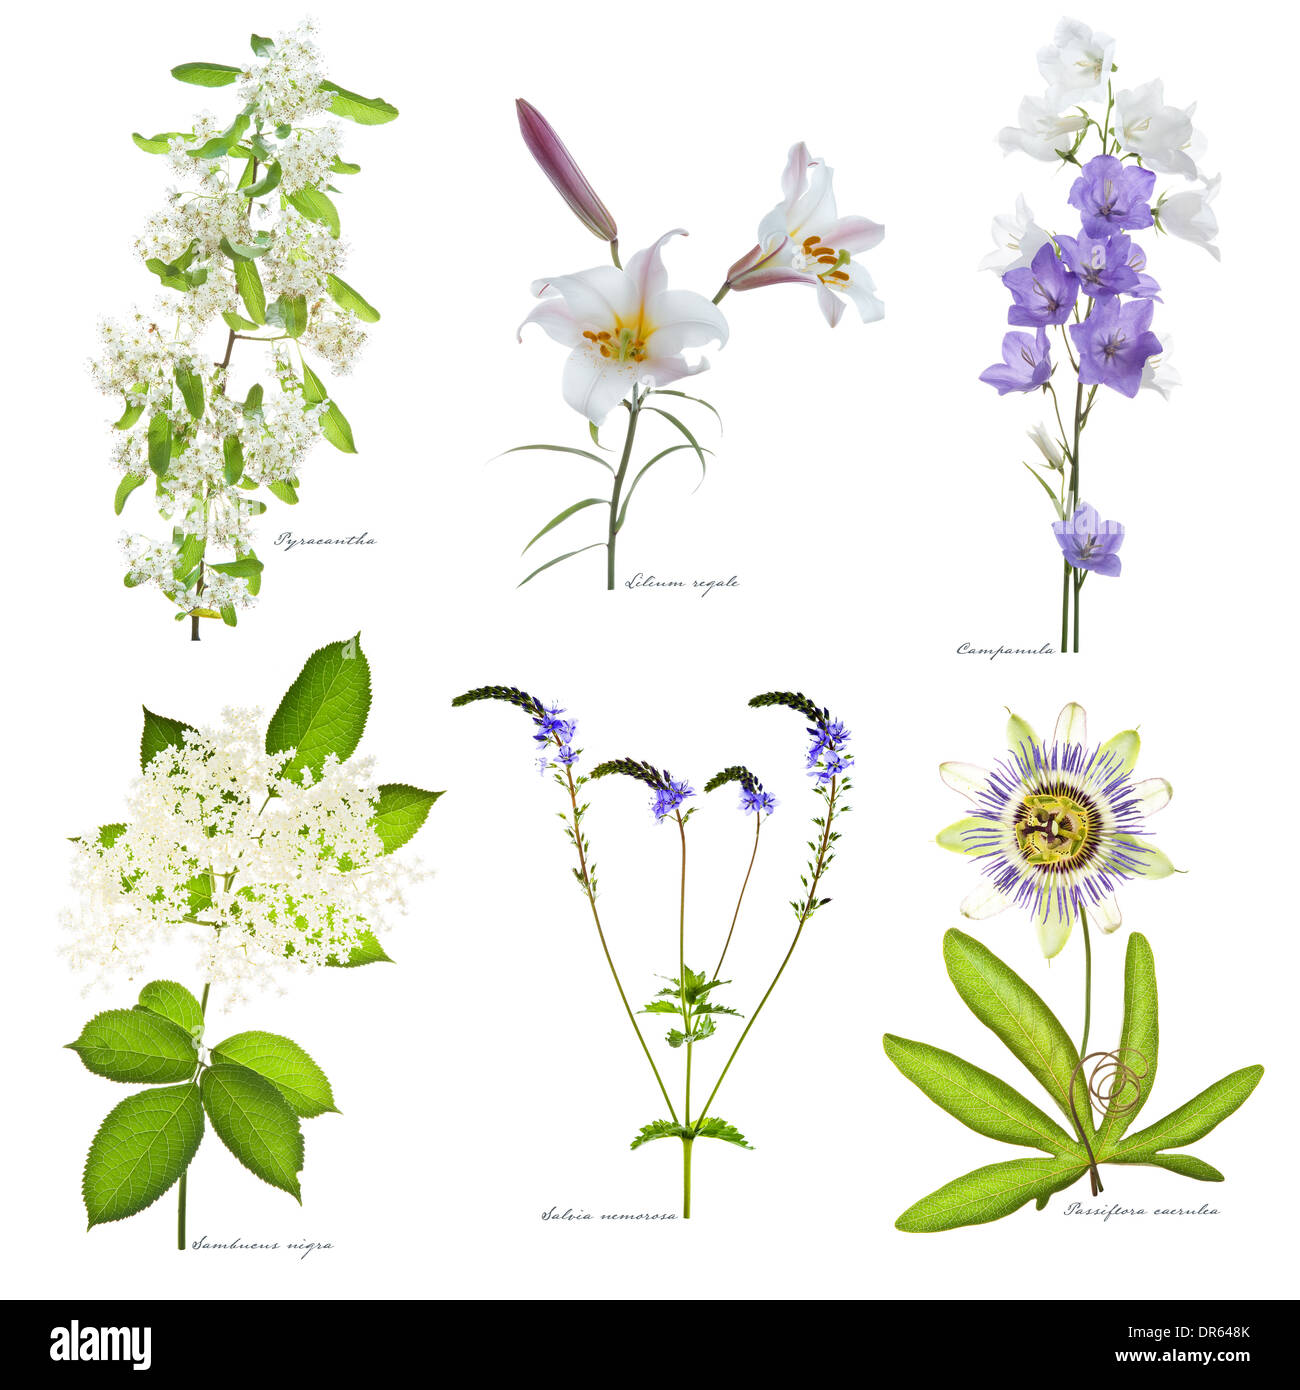 Pyracantha, Lilium regale, Campanula, Sambucus nigra, Salvia nemorosa, Passiflora caerulea flowering in July Leed West Yorkshire Stock Photo